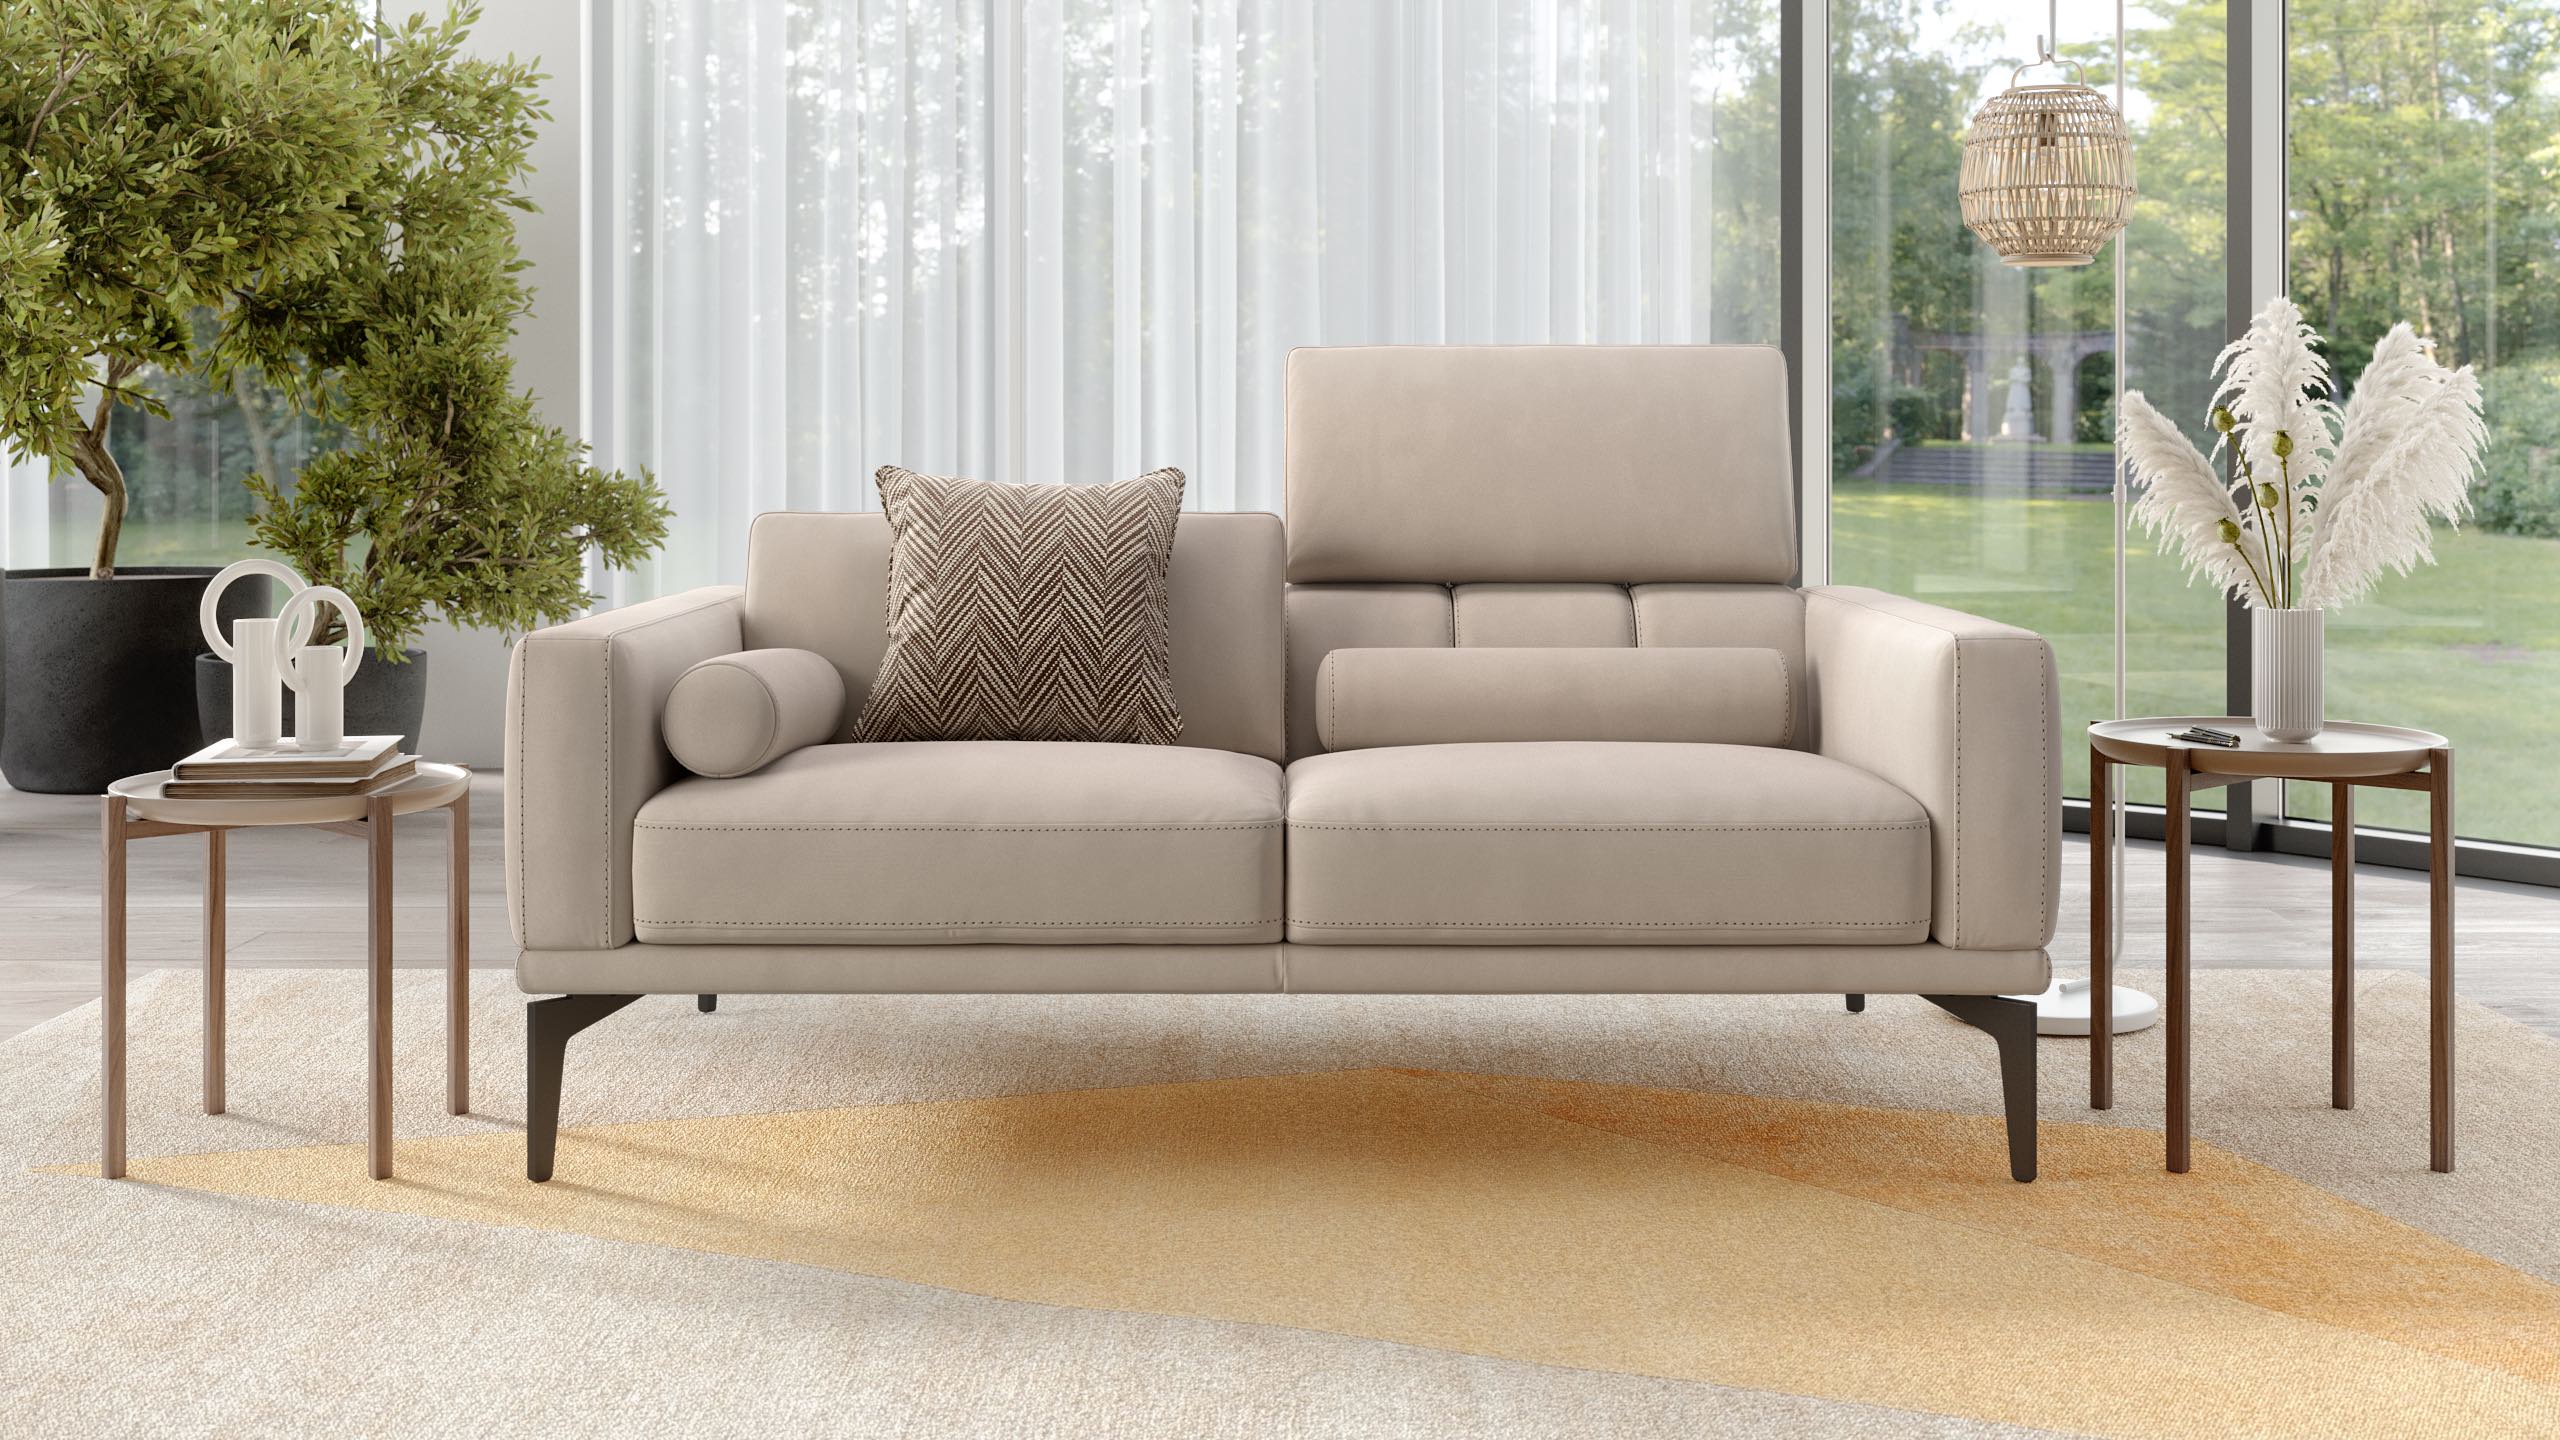 Nierenkissen sofa - Der absolute TOP-Favorit unter allen Produkten